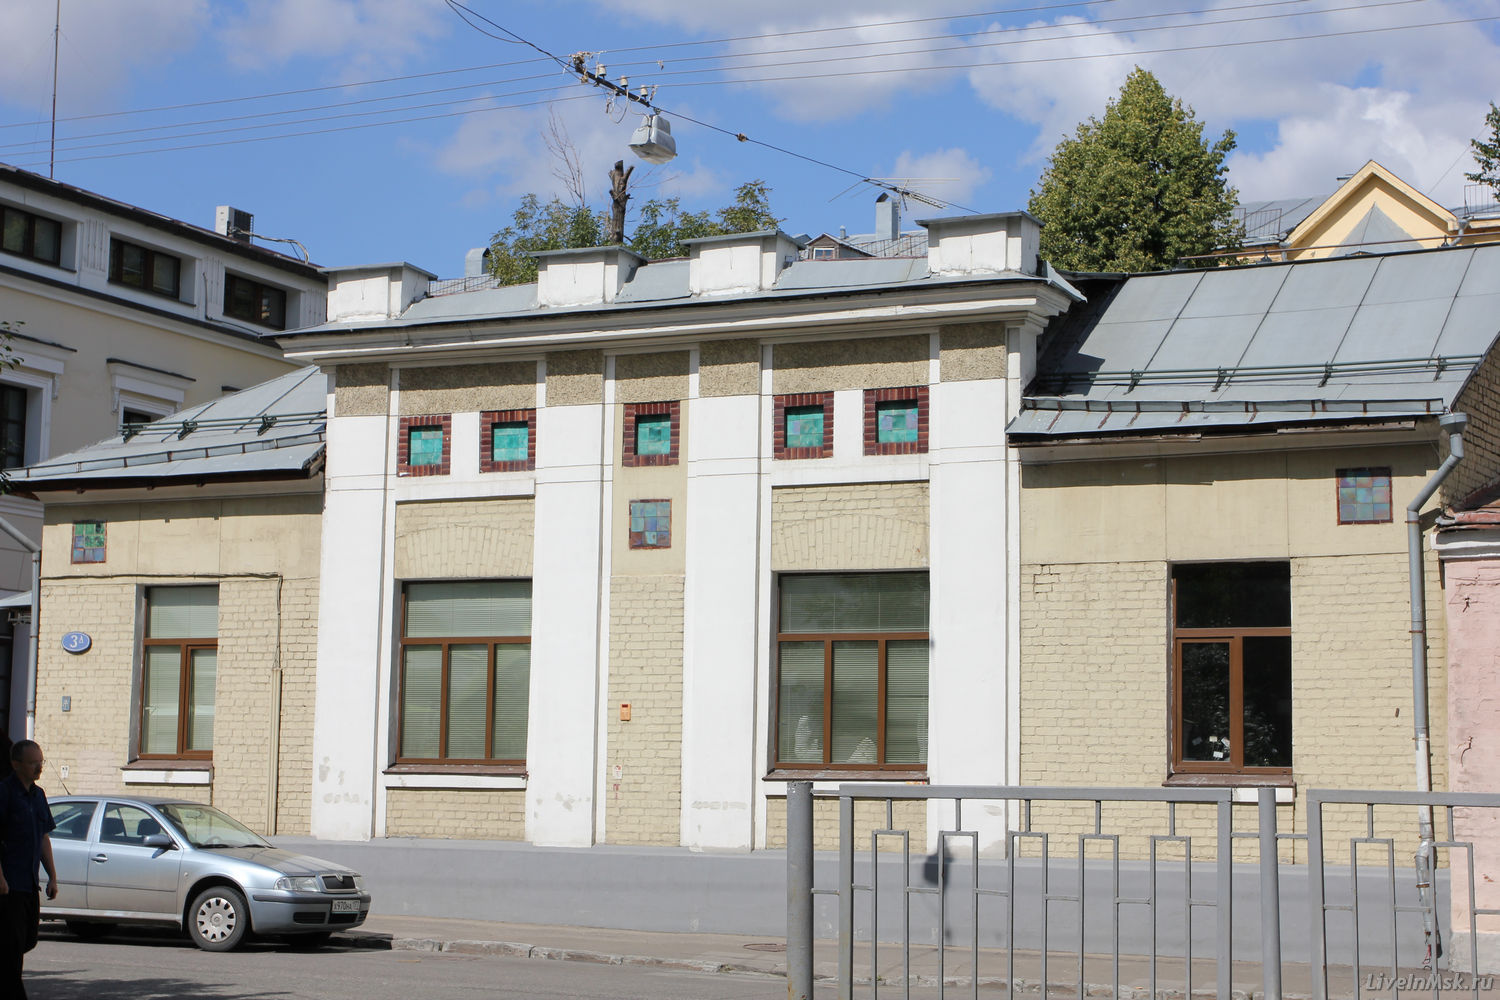 Дом скульптора Согоян, фото 2015 года